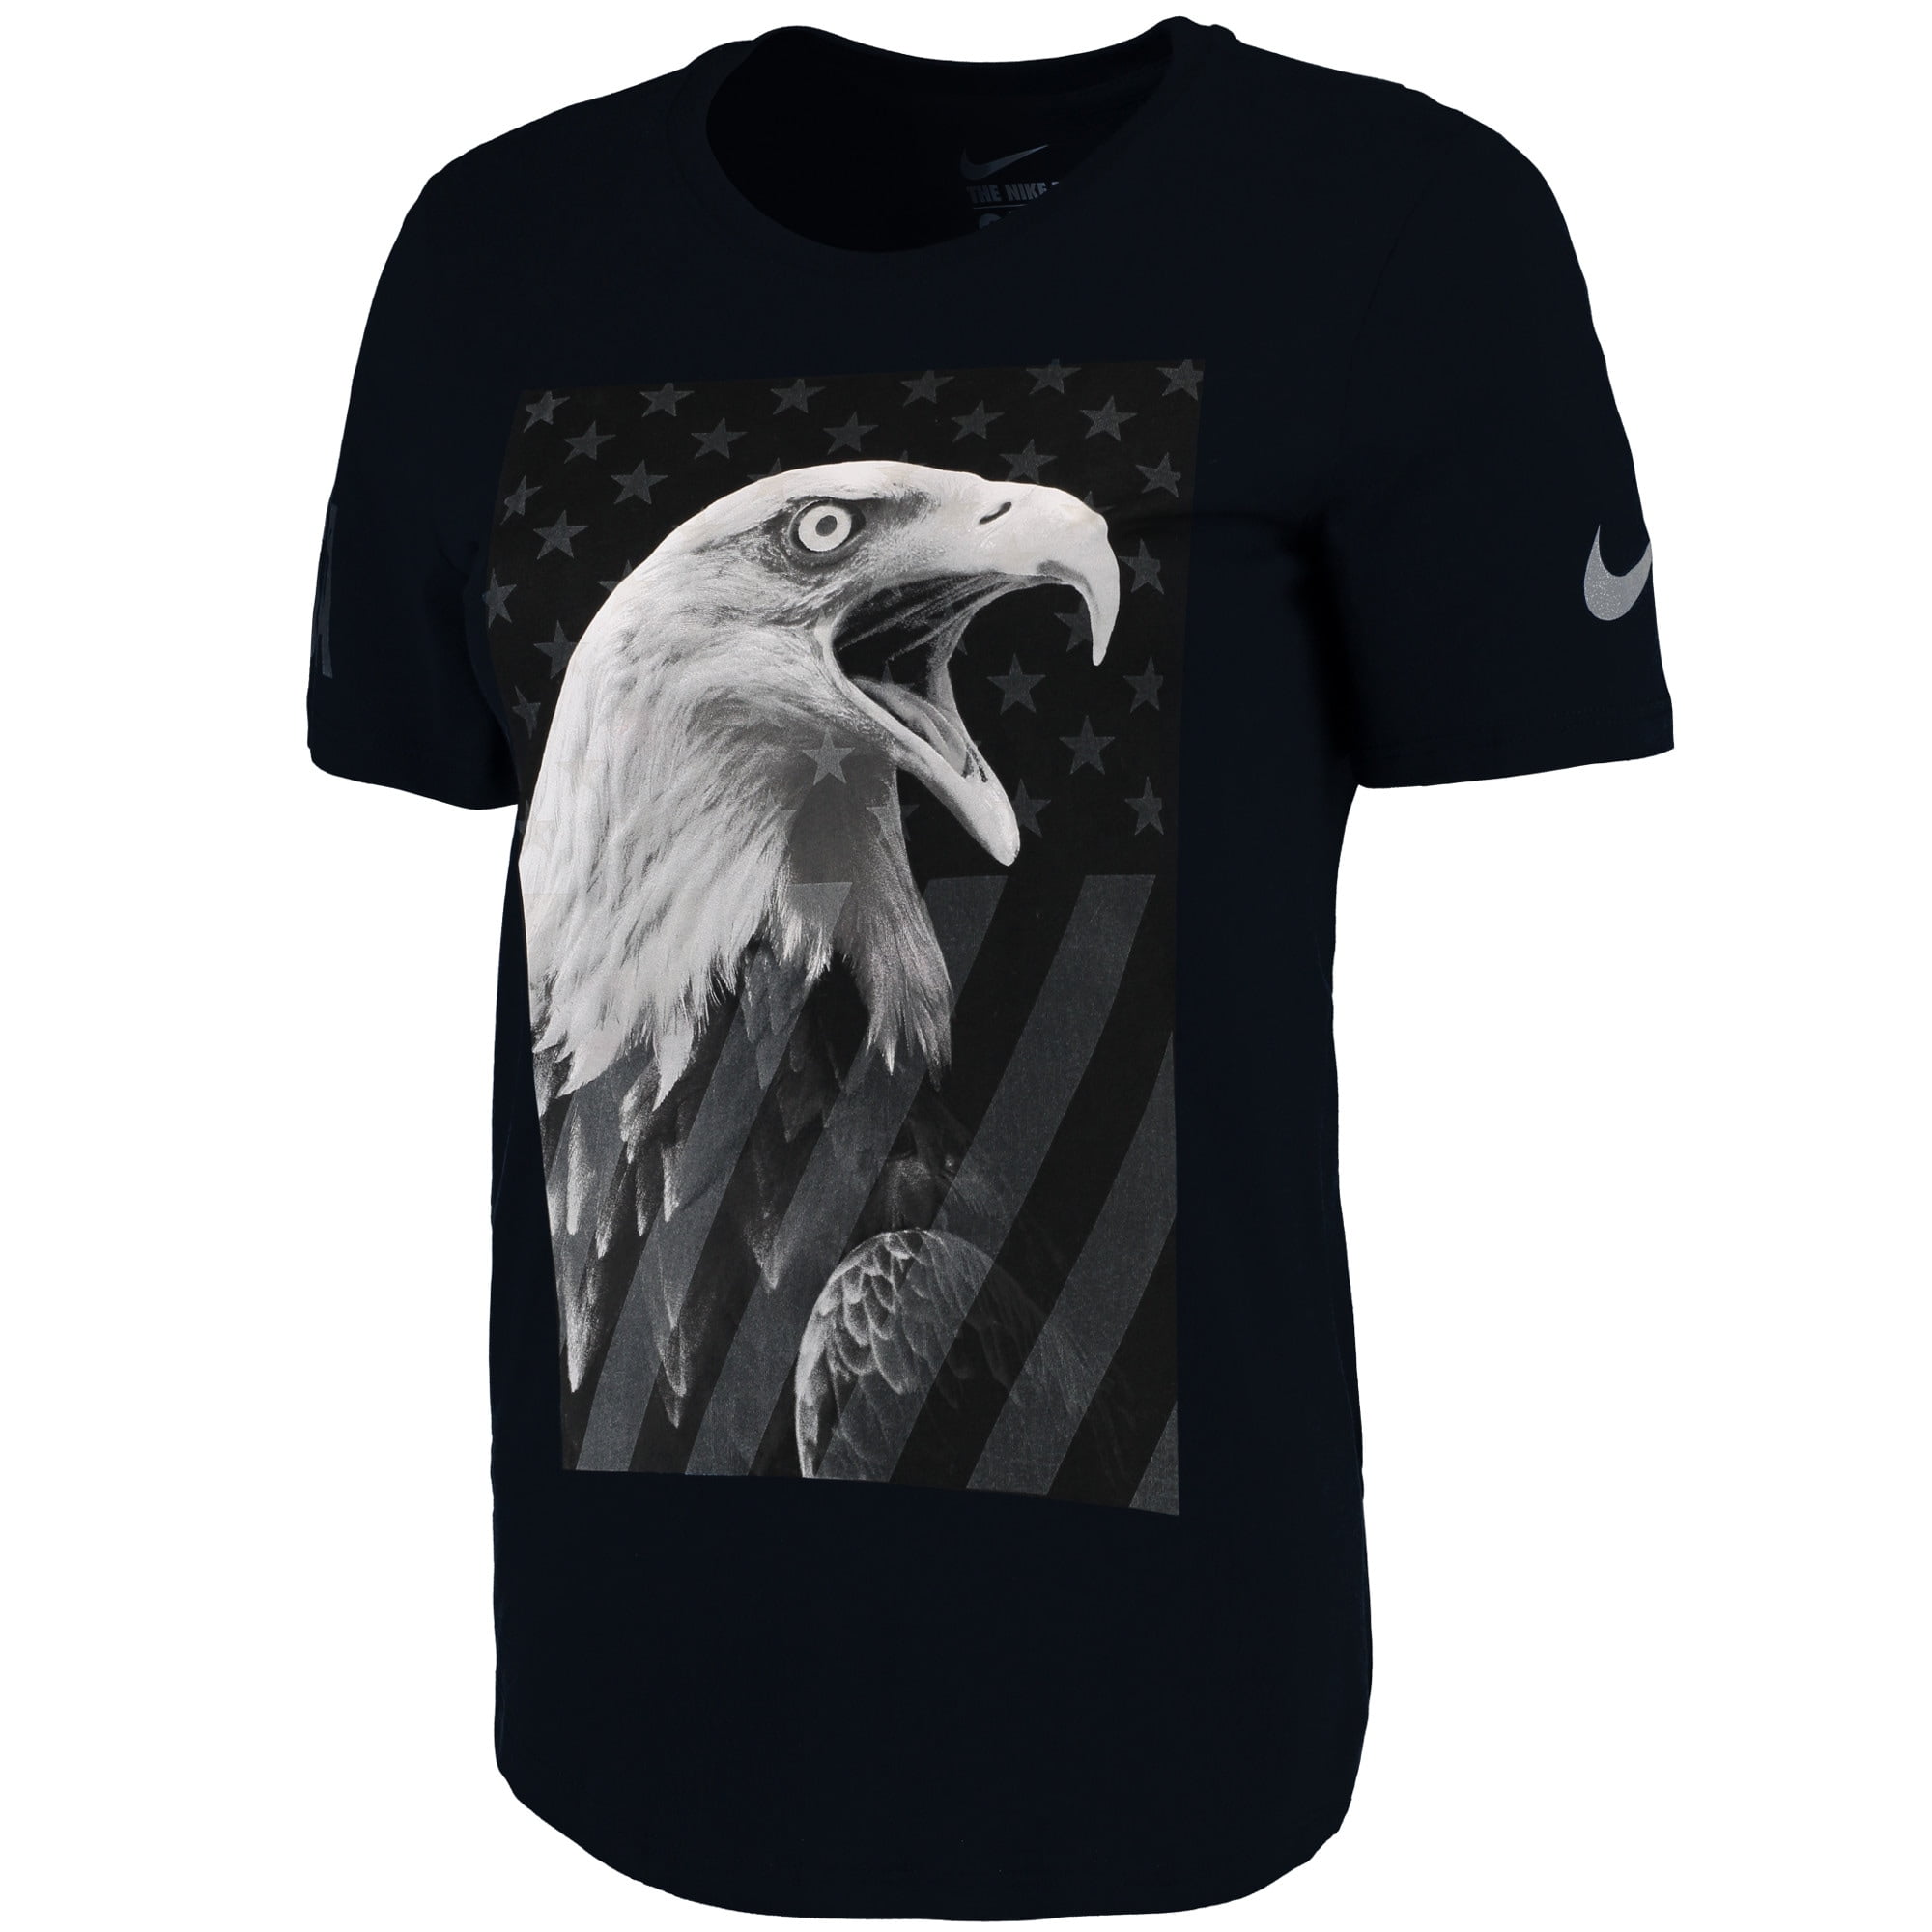 Team USA Nike Women's Eagle T-Shirt 